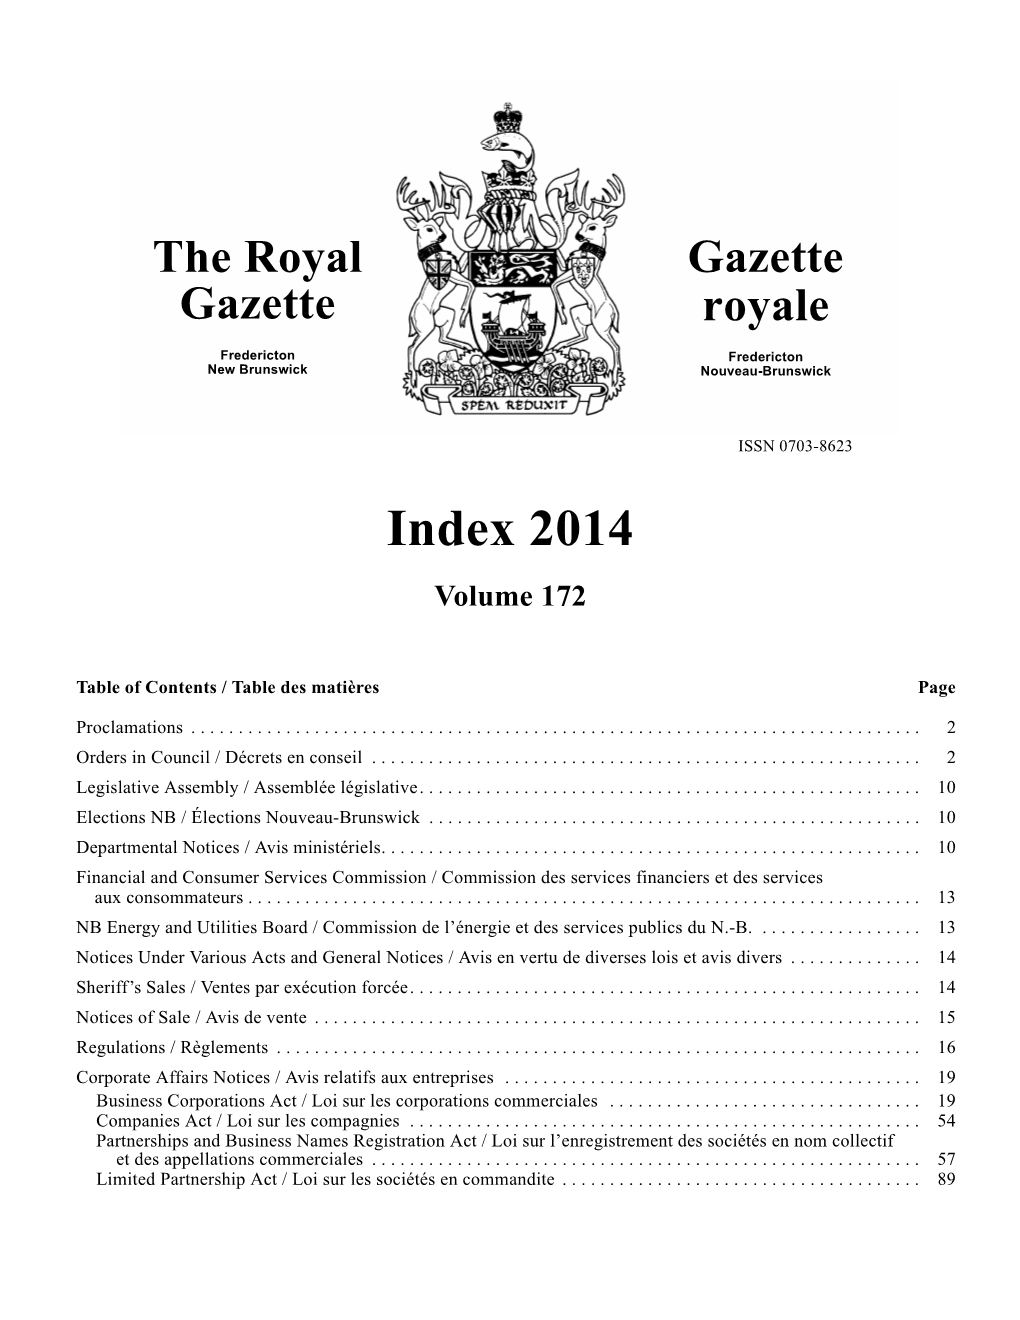 The Royal Gazette Index 2014